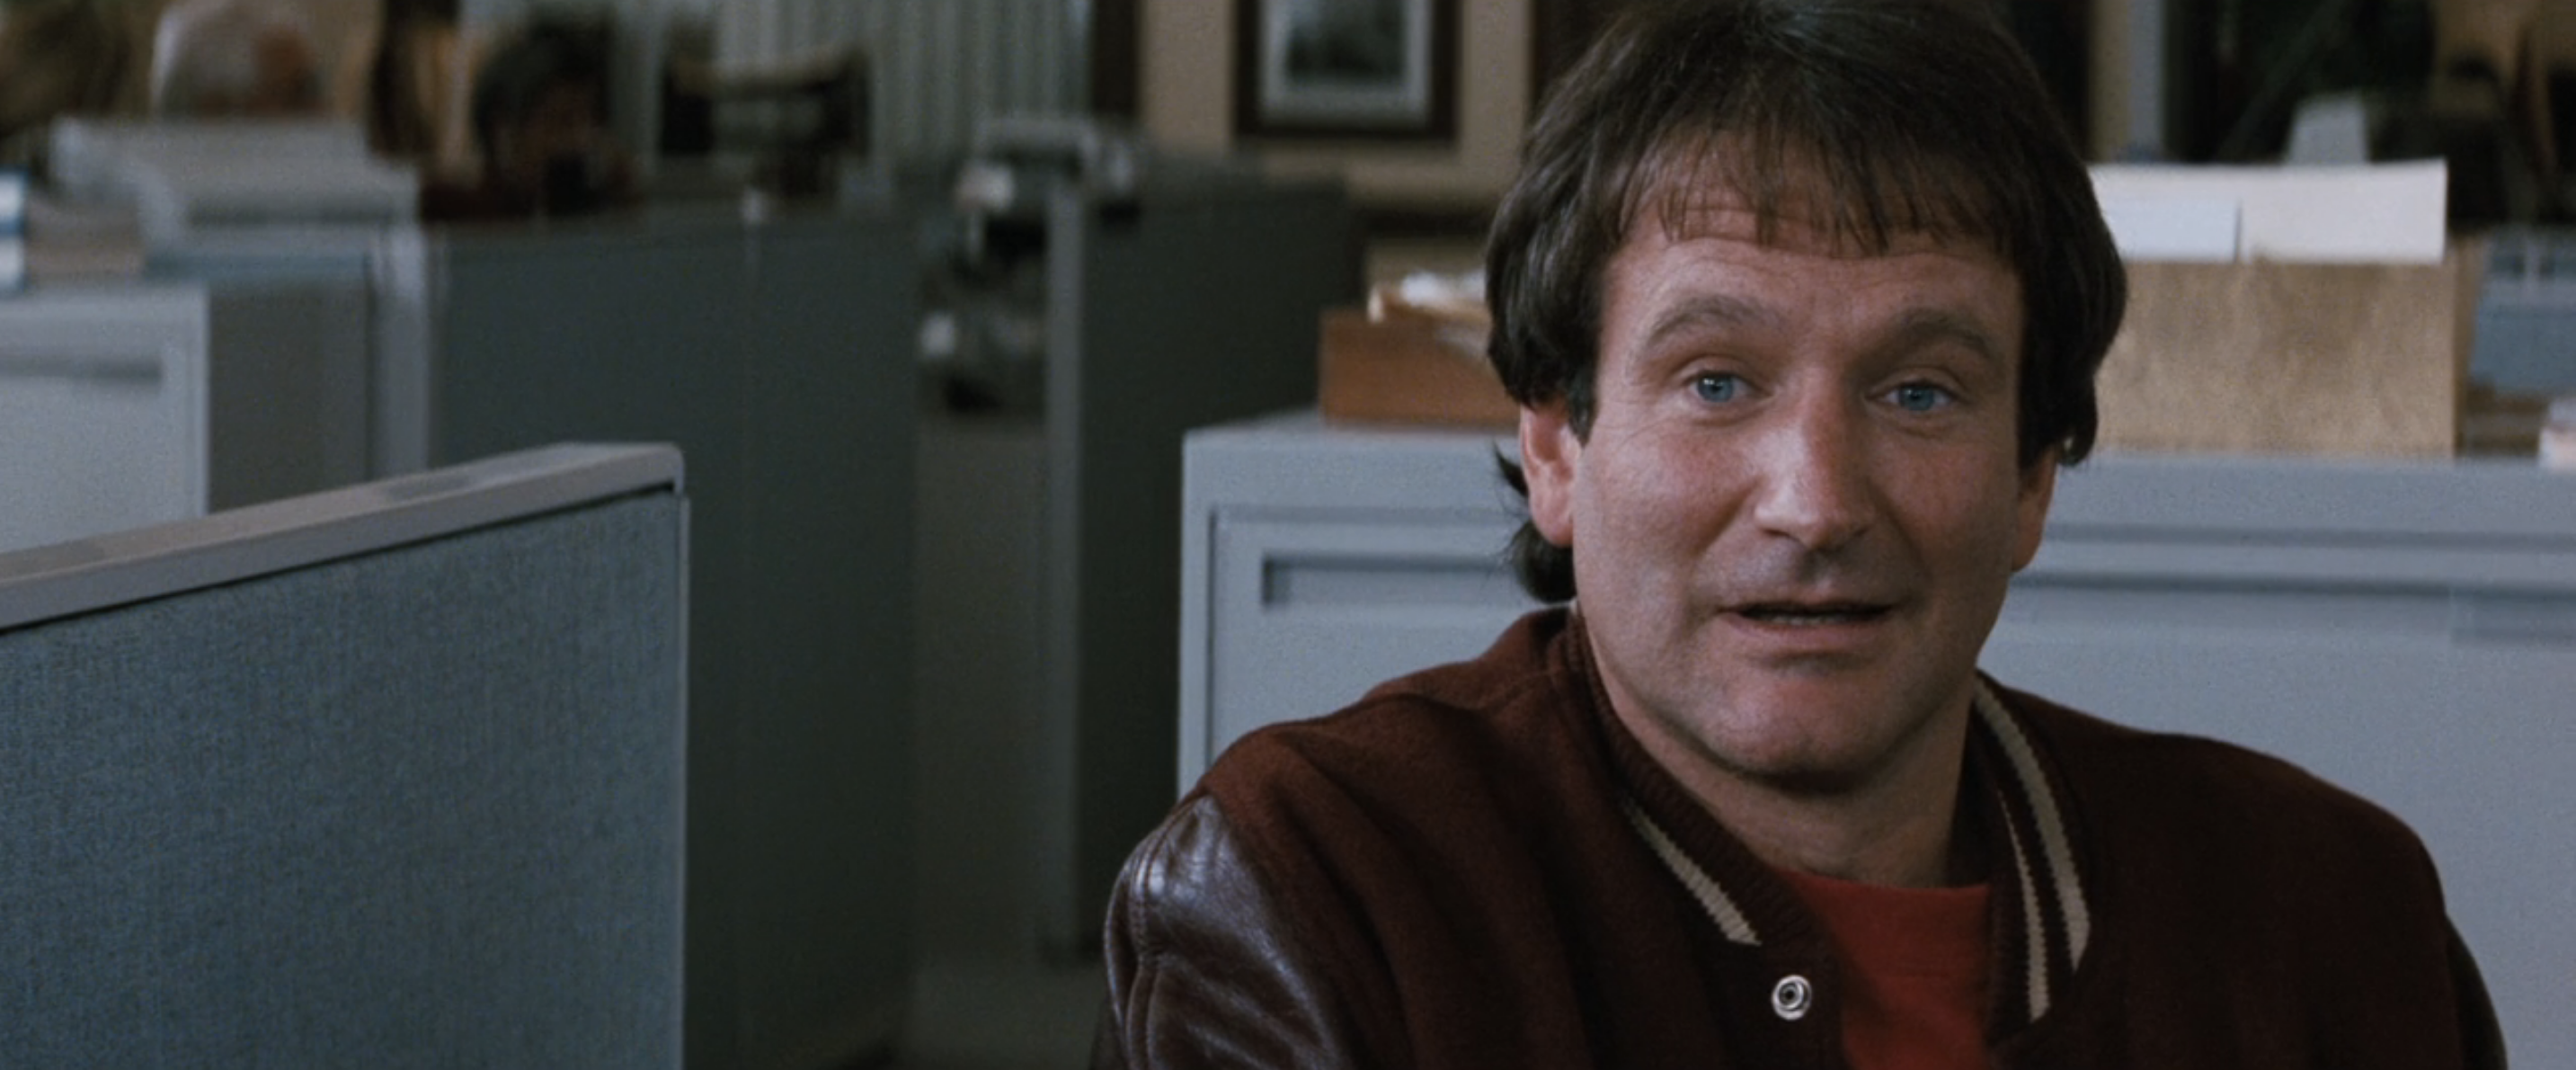 Mrs. Doubtfire Cast - Robin Williams as Daniel Hillard